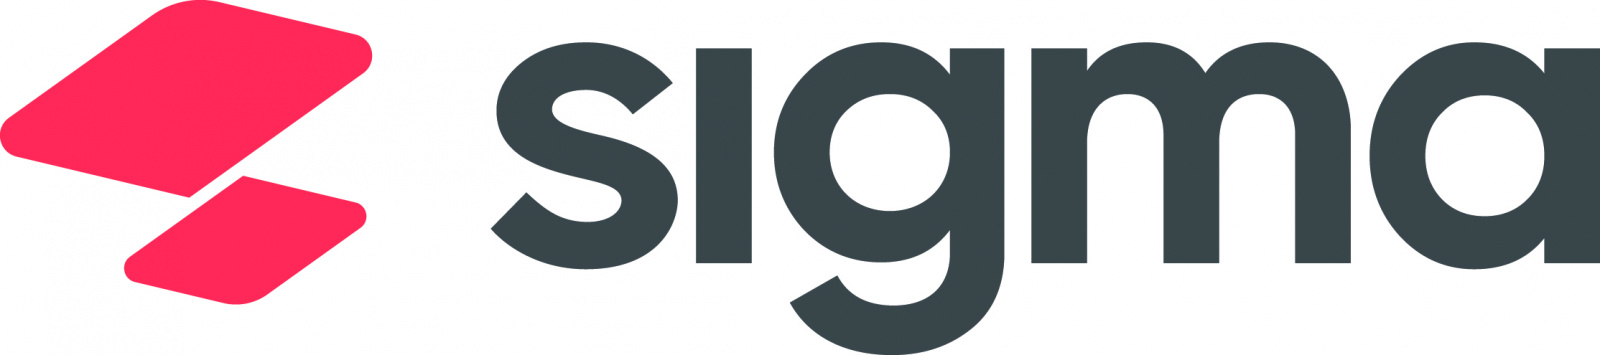 sigma logo_RGB.jpg